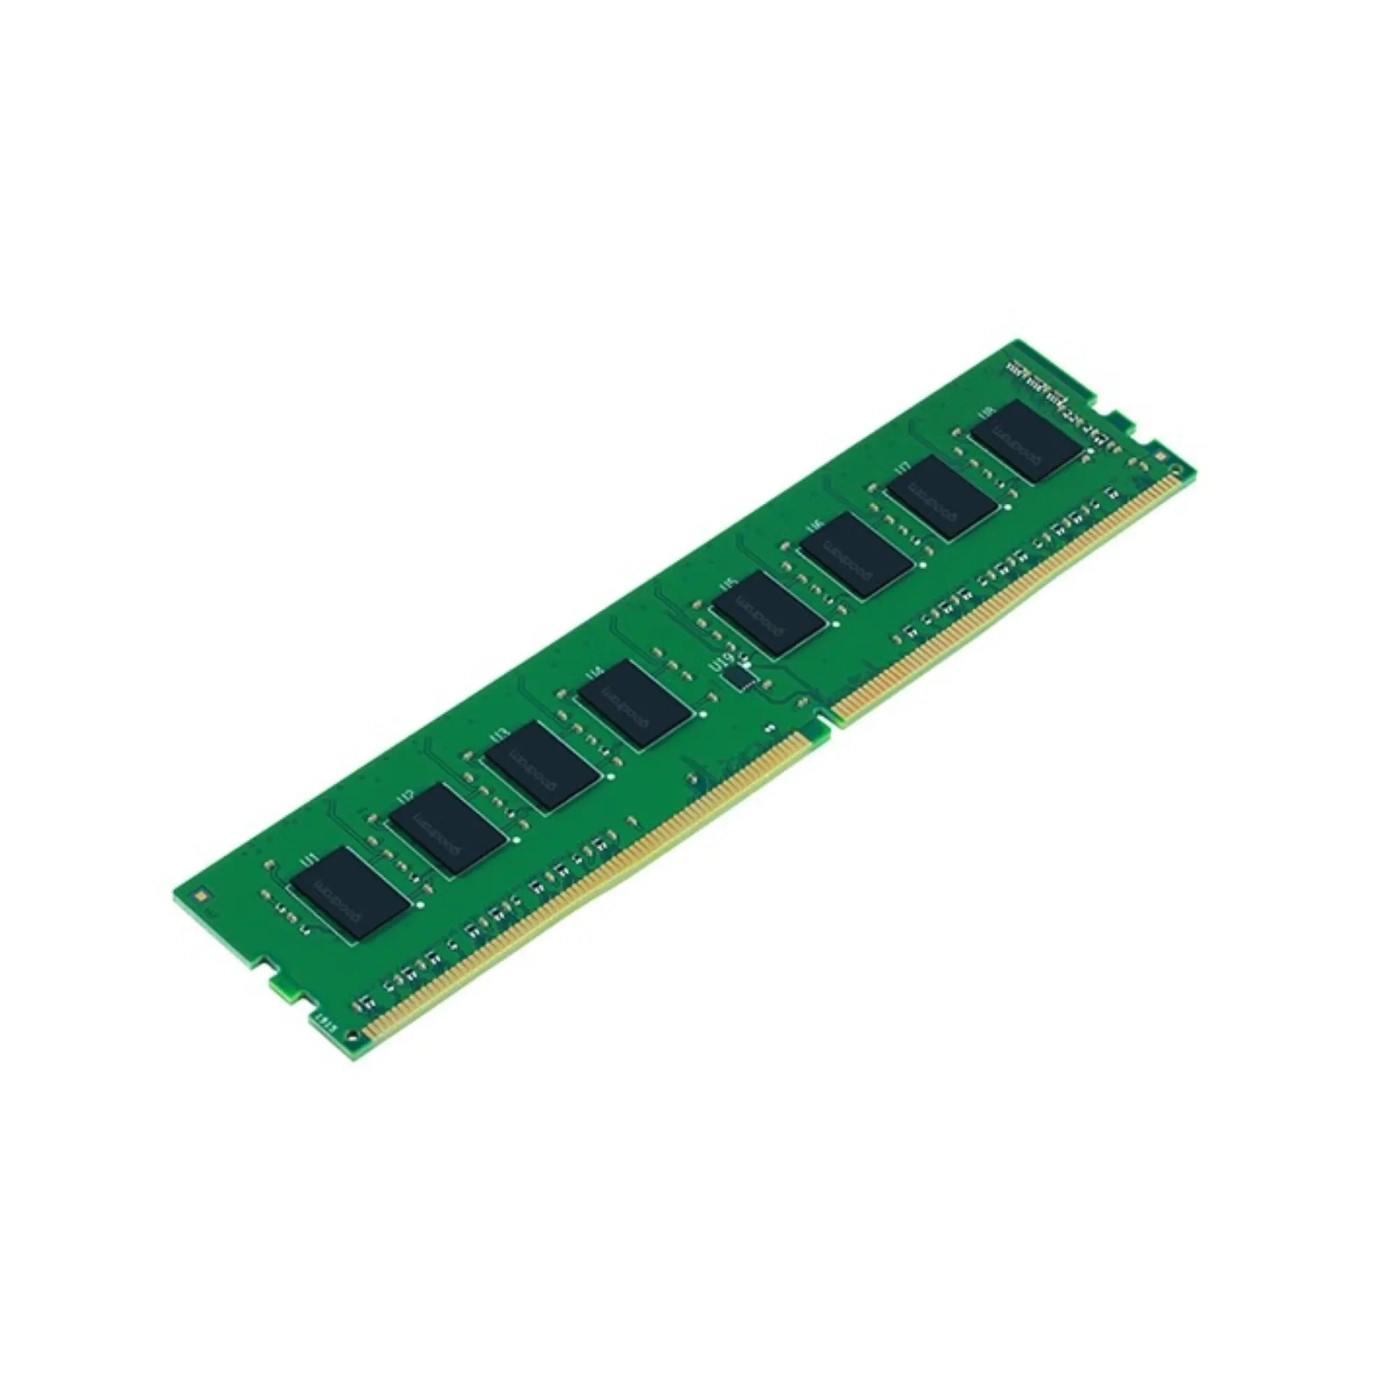 Купить Модуль памяти Goodram DDR4-3200 16GB (GR3200D464L22/16G) - фото 2